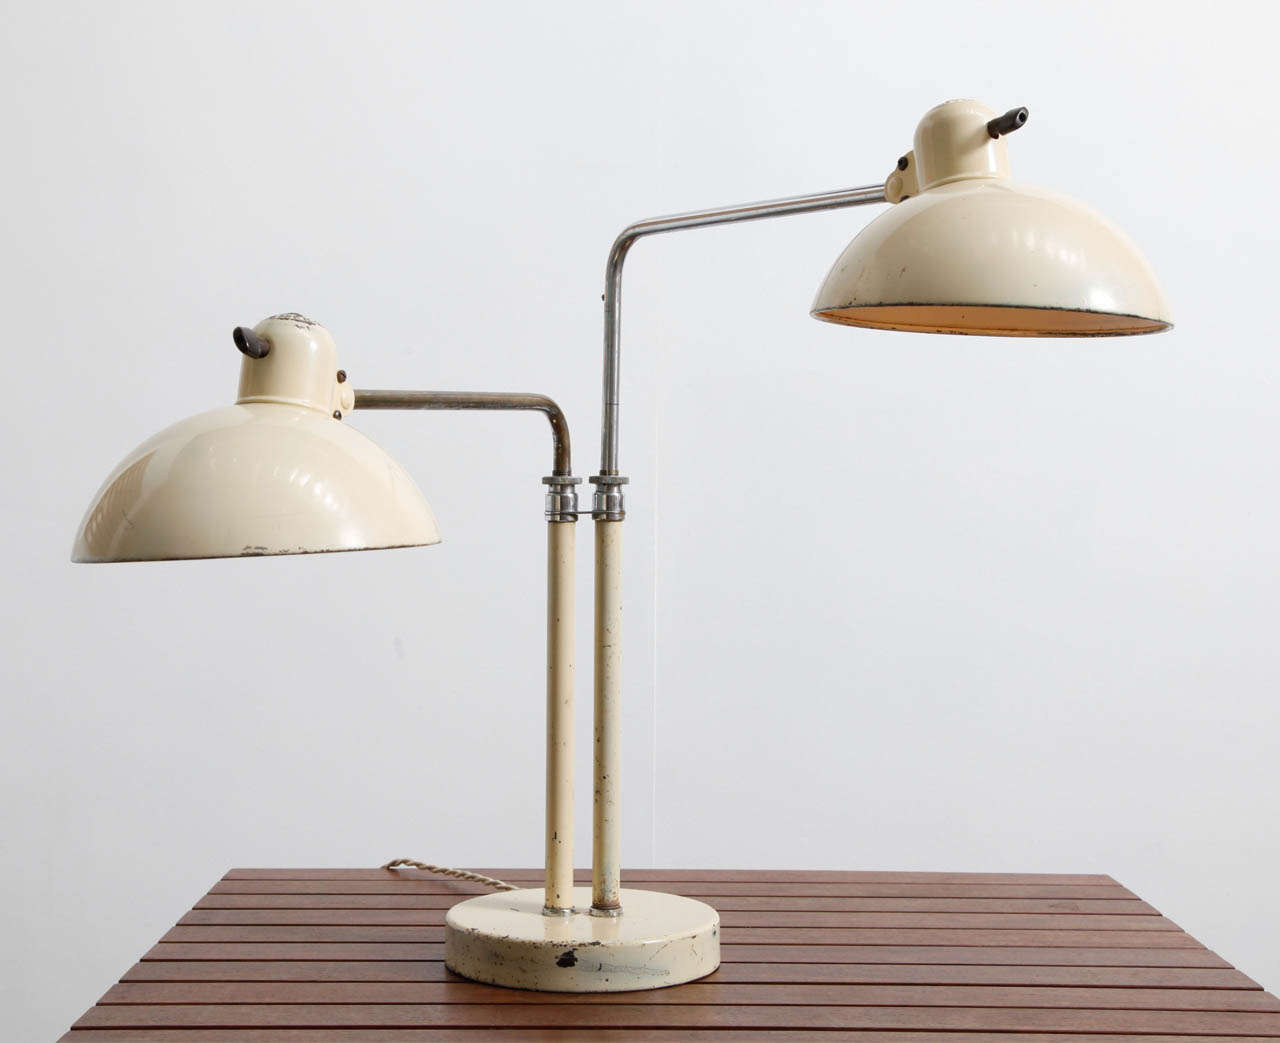 Christian Dell

Table lamp

1940

Diam.Base: 20cm